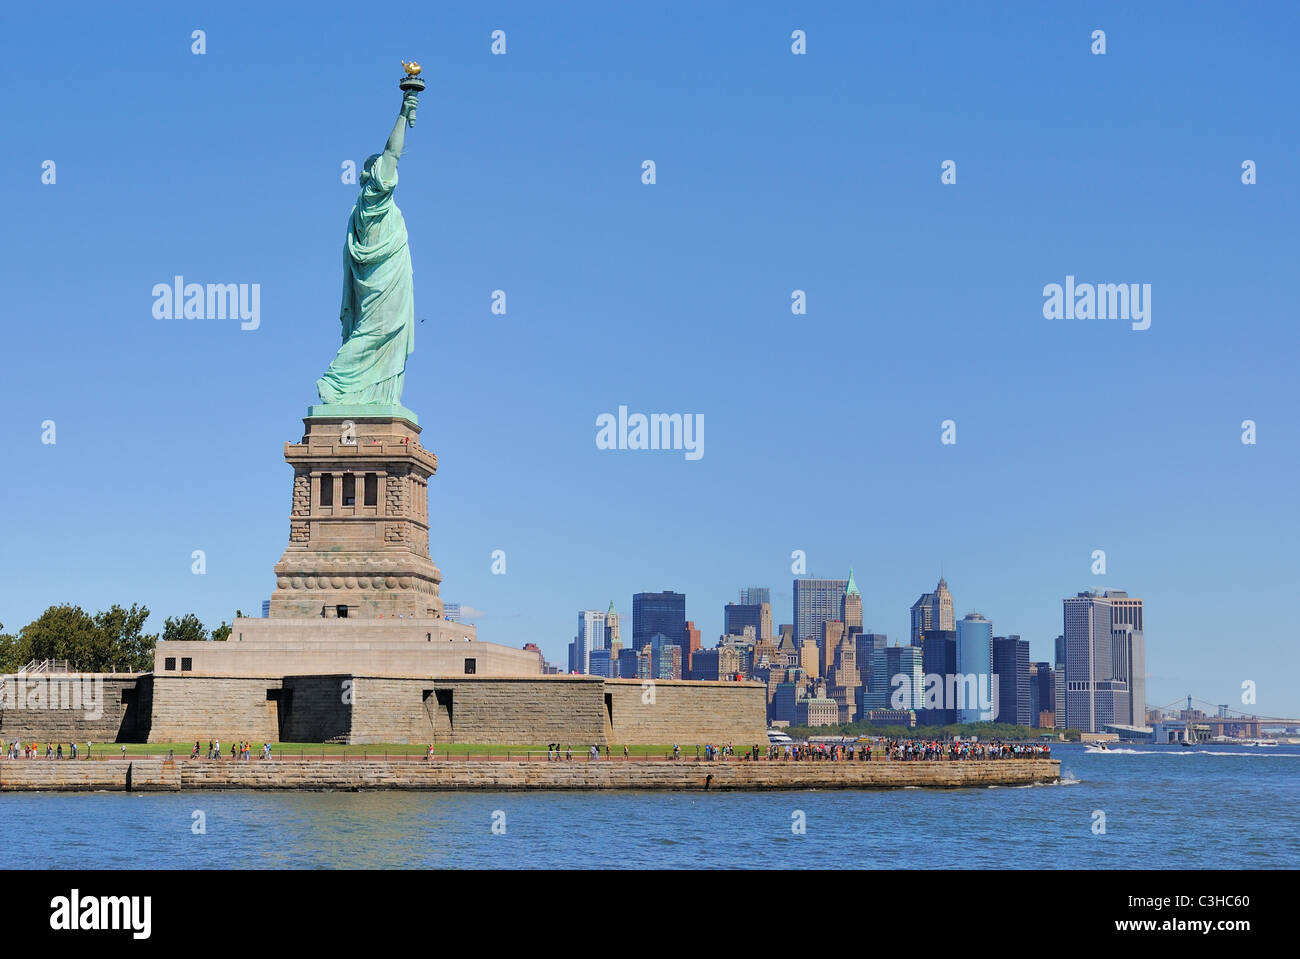 The Statue of Liberty on Liberty Island. Stock Photo